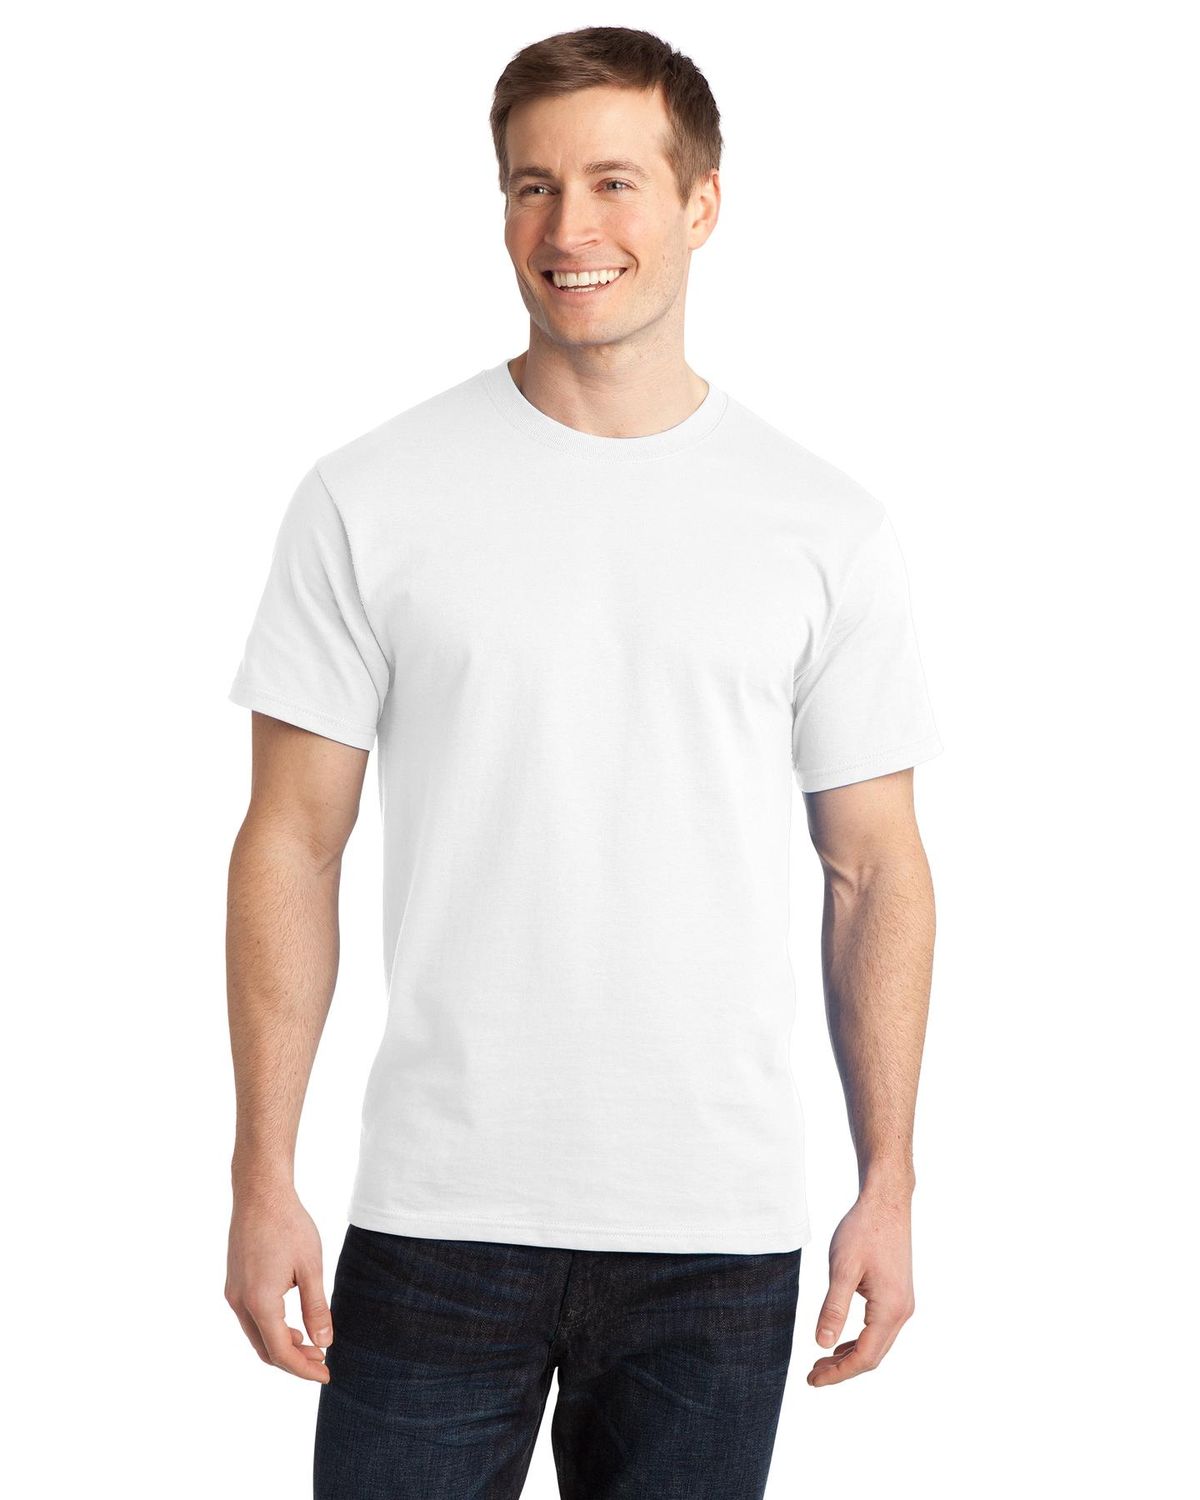 'Port & Company PC150 Men’s Ring Spun Cotton T-Shirt'